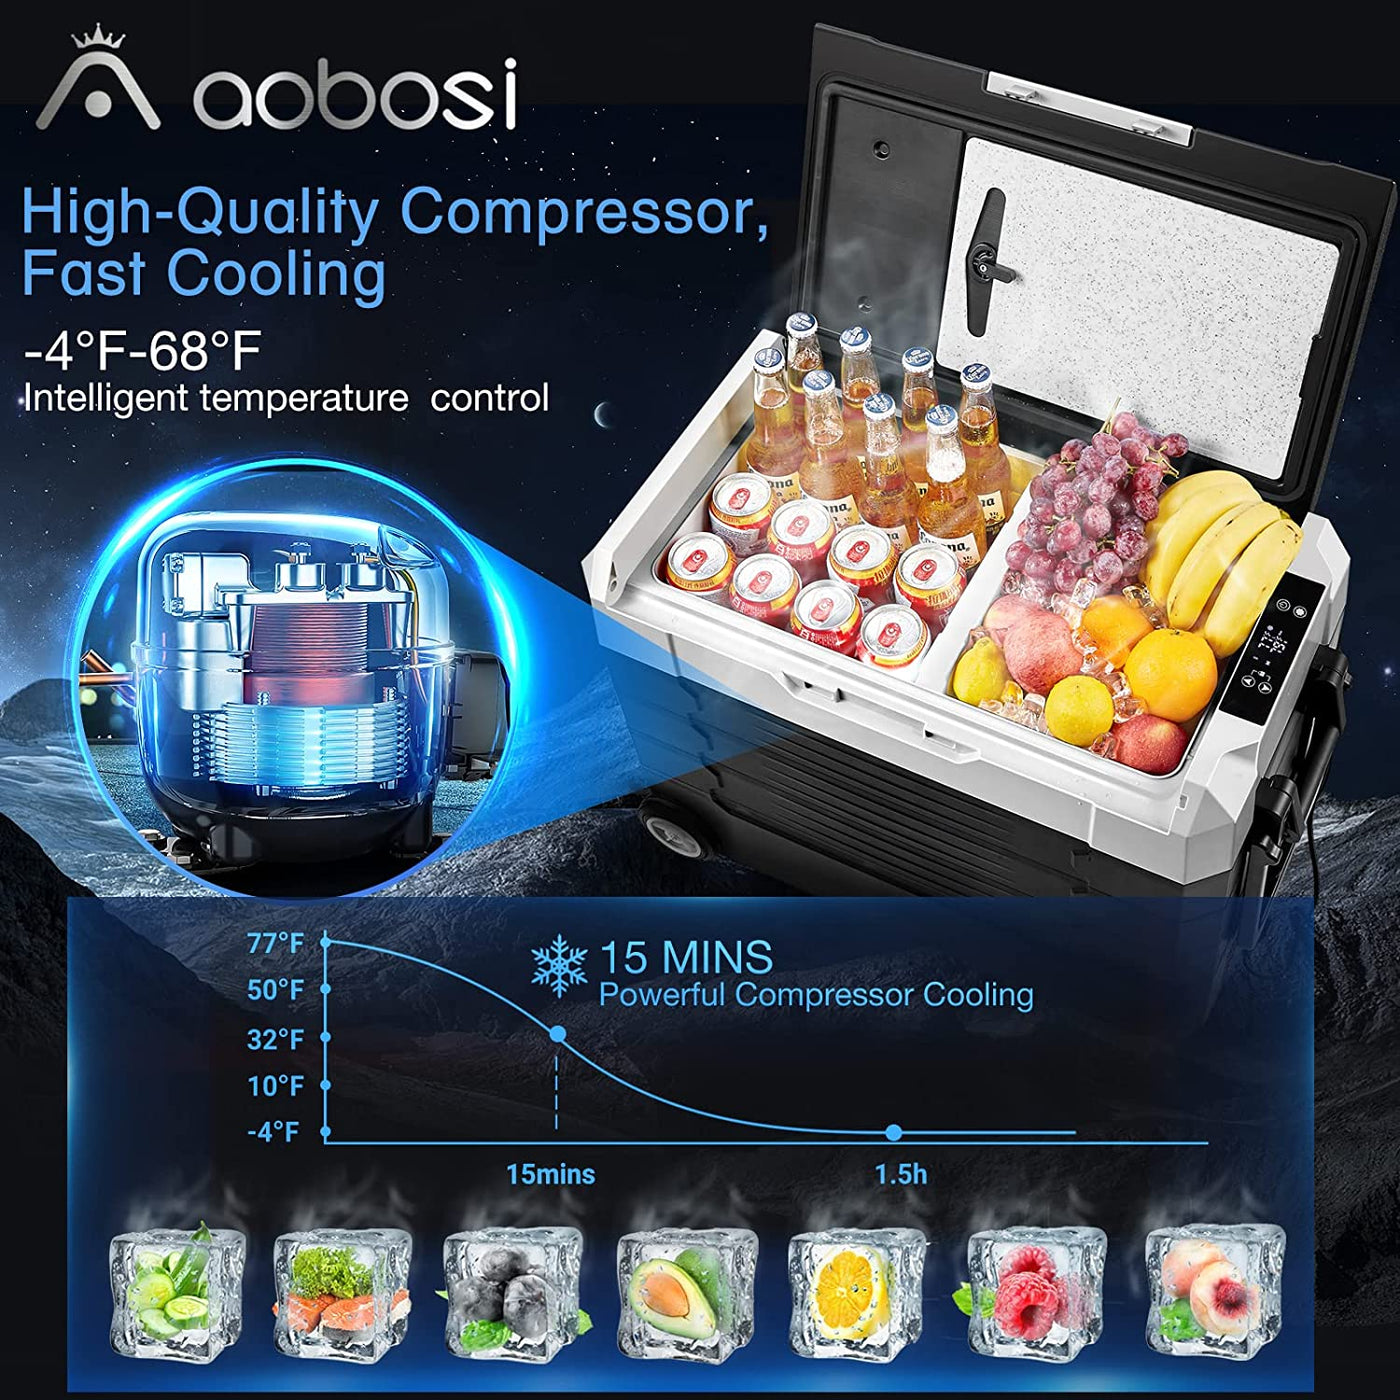 AOBOSI Portable Fridge on Wheels with Foldable Handle 48qt/45L